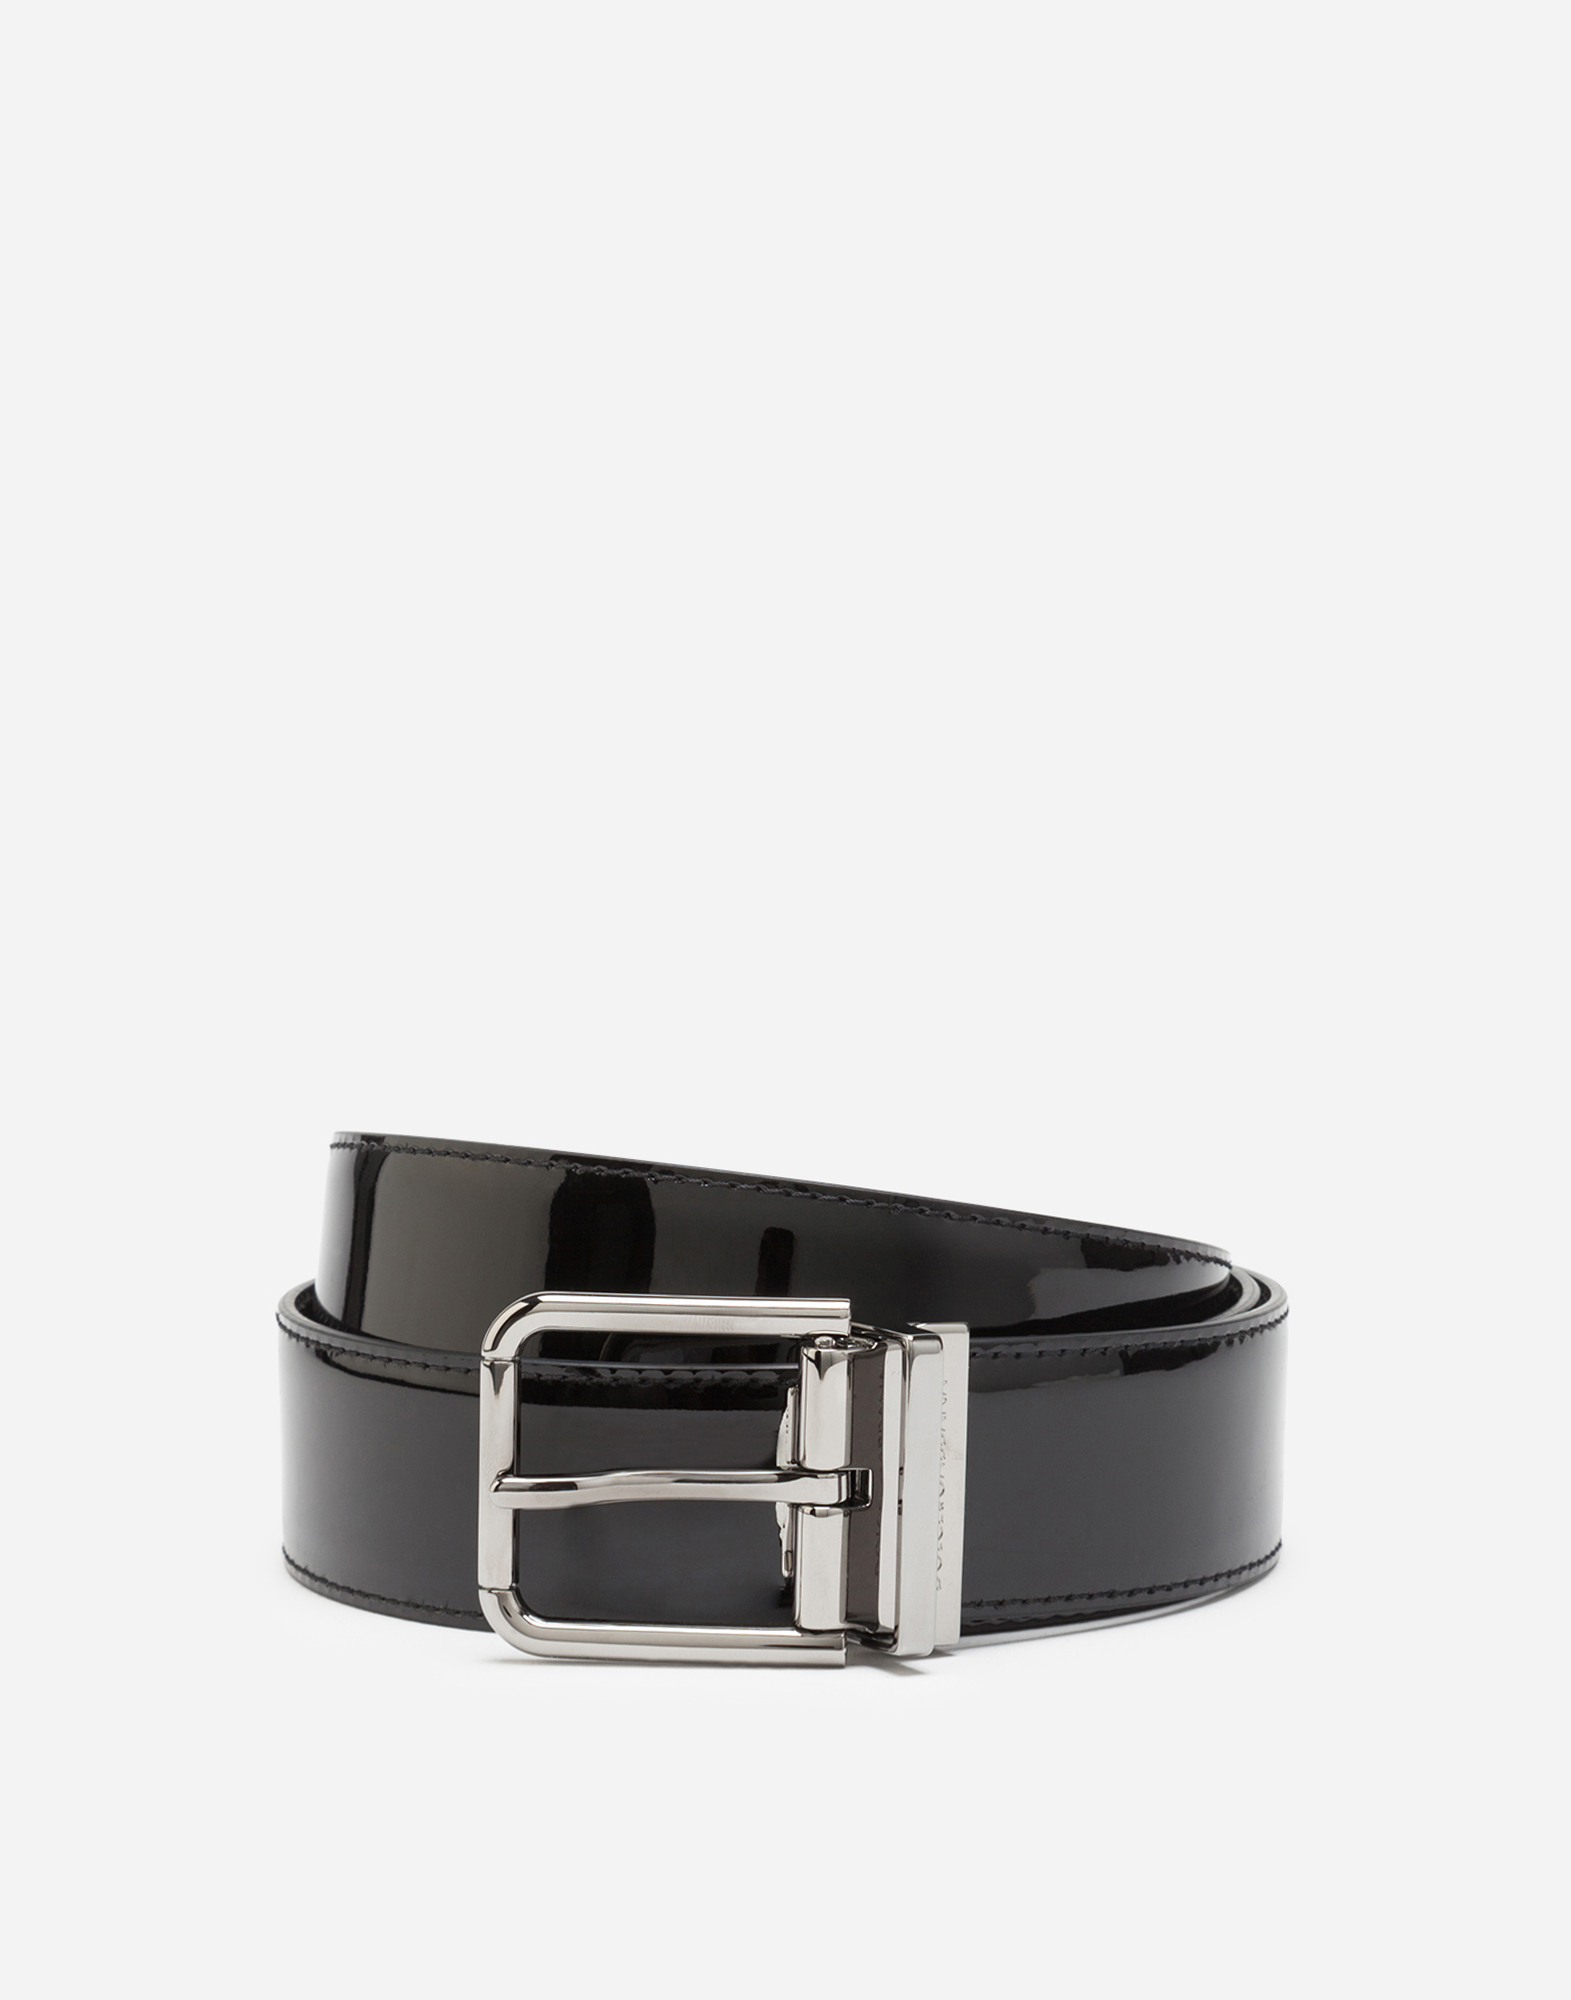 Patent leather belt in Black